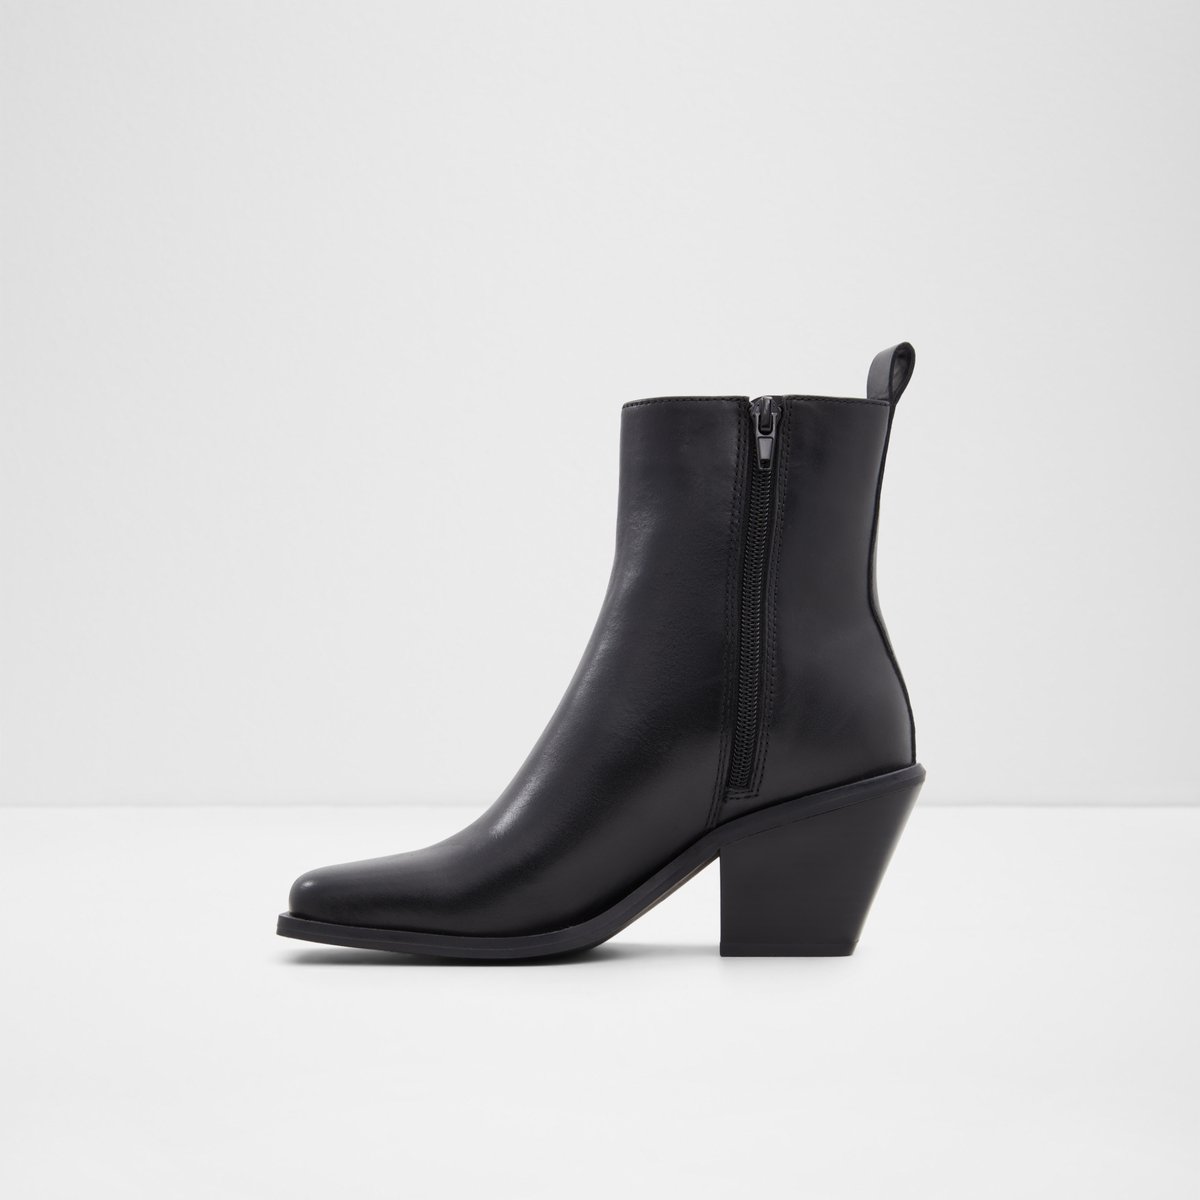 Vaquera Black Leather Women's Ankle Boots | ALDO Canada